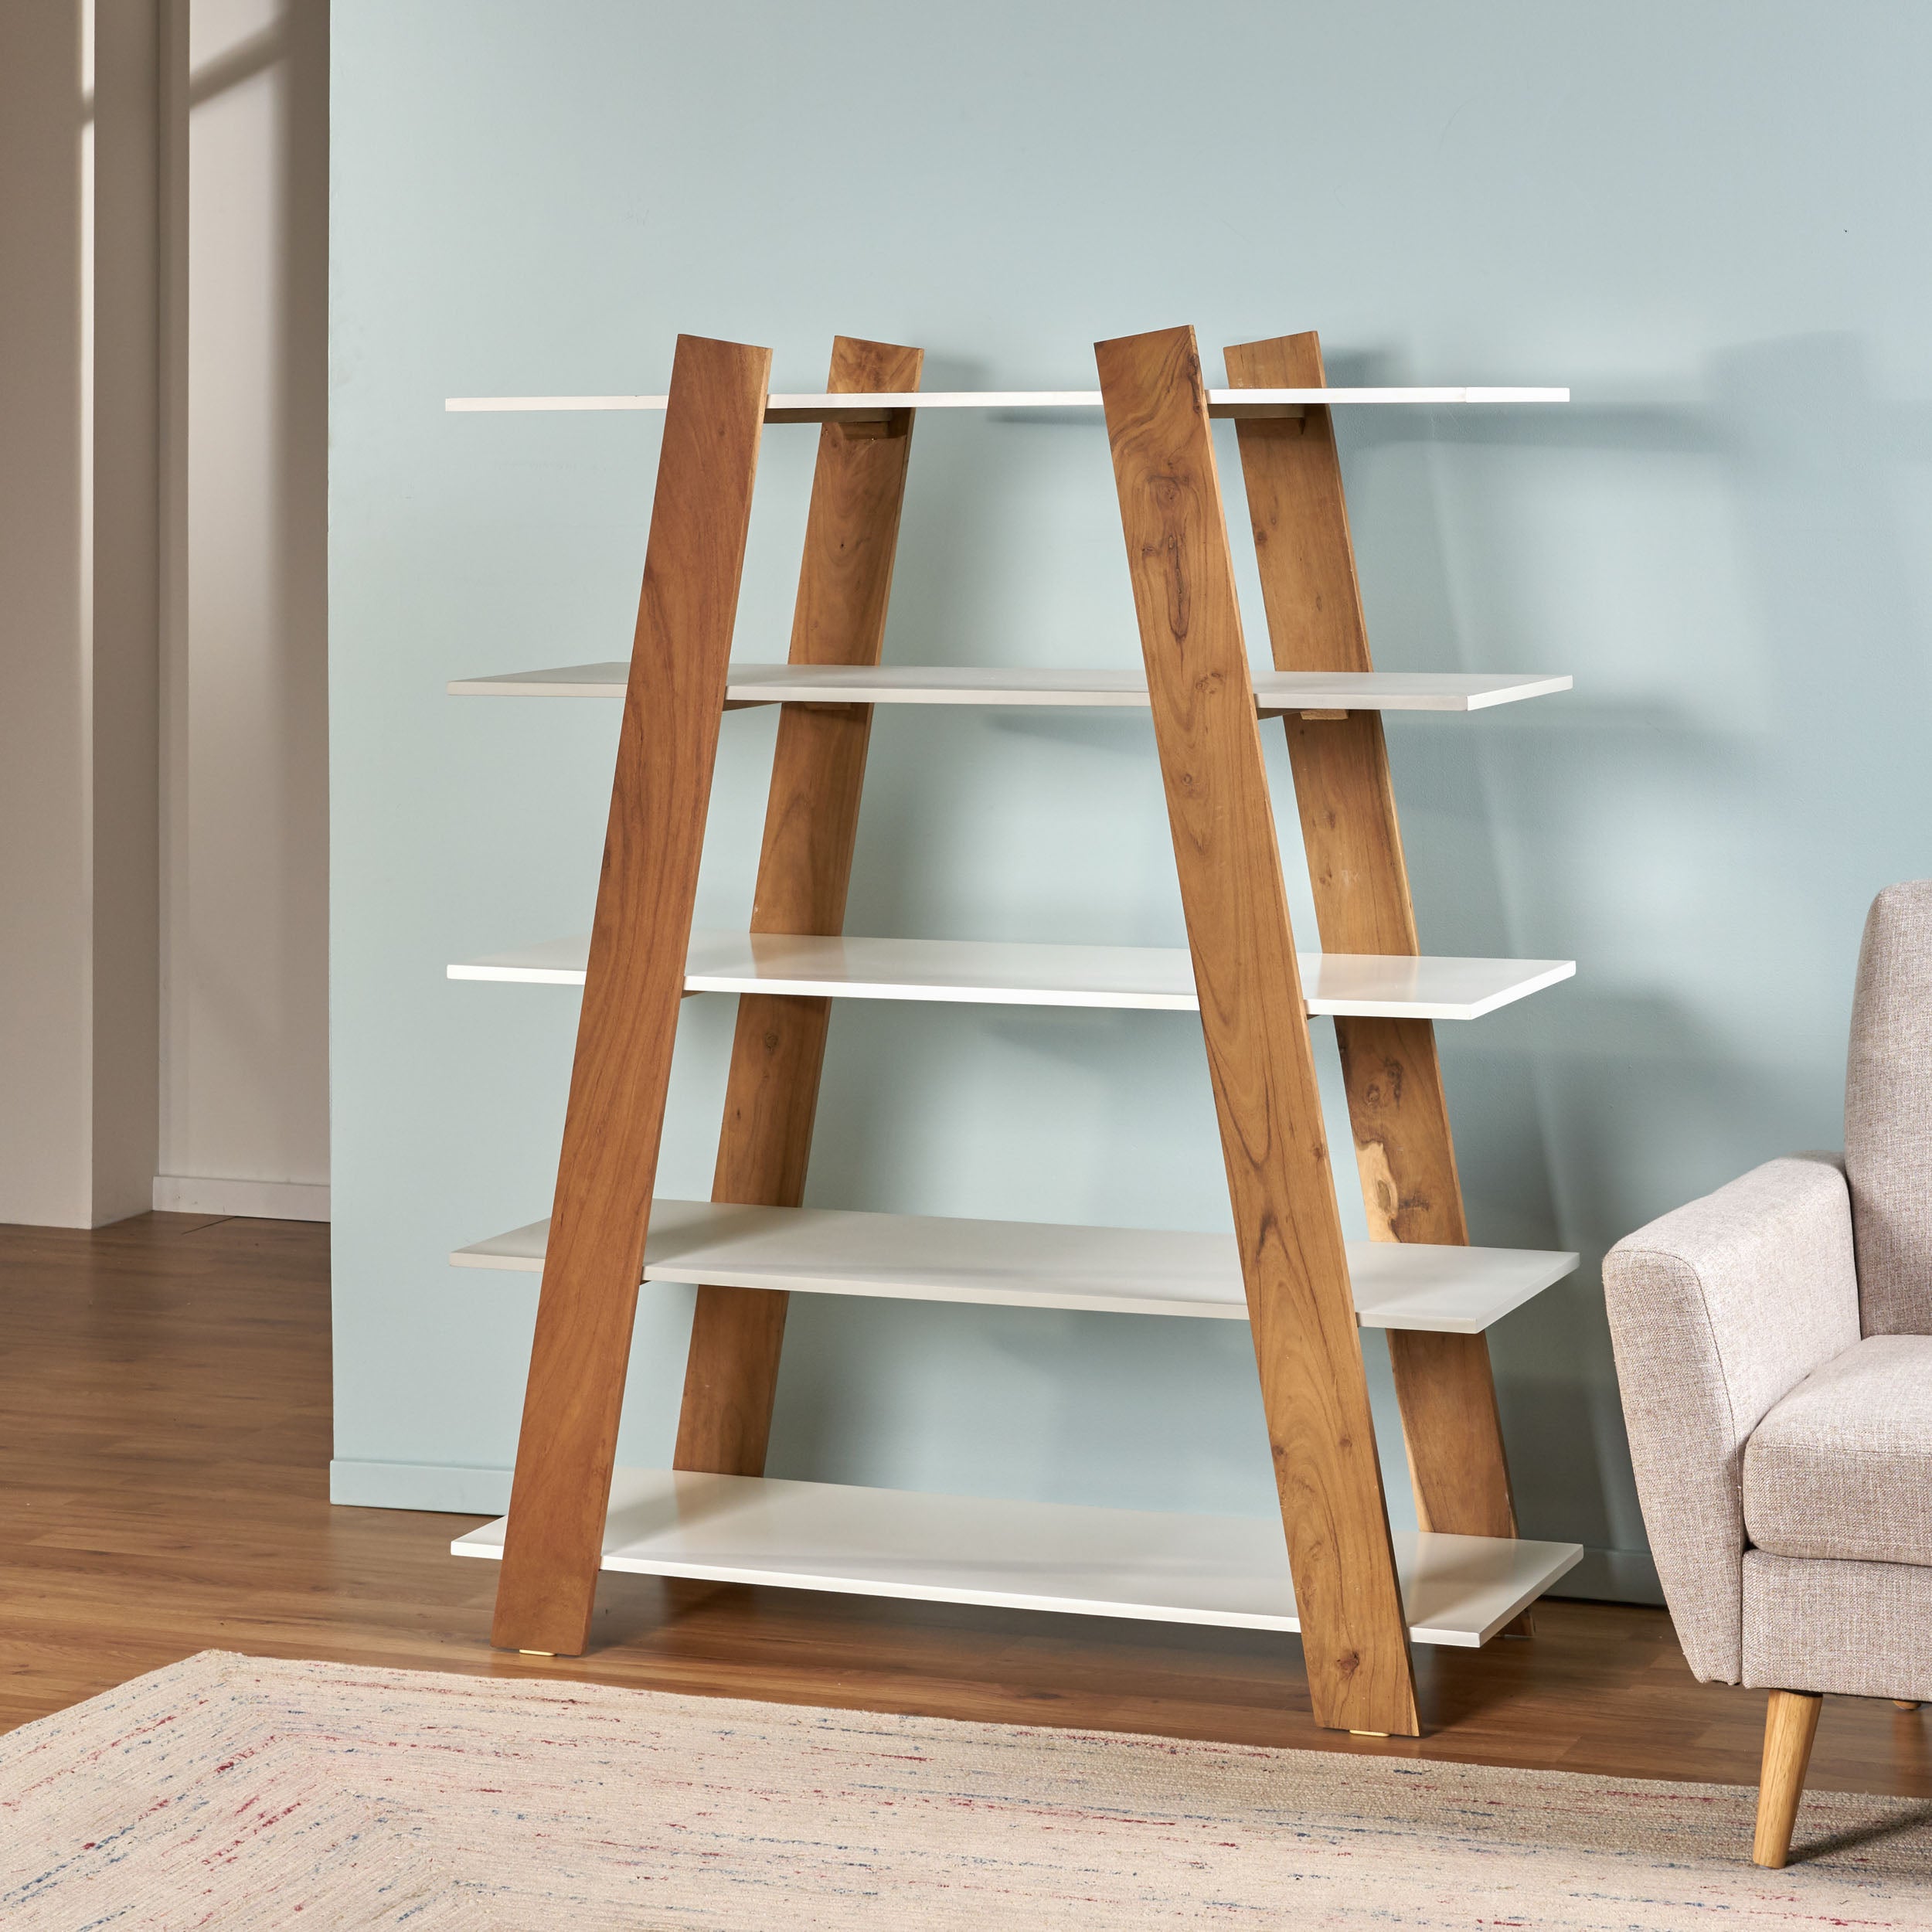 Jahzir Scandinavian Design 5-Shelf Etagere Bookcase